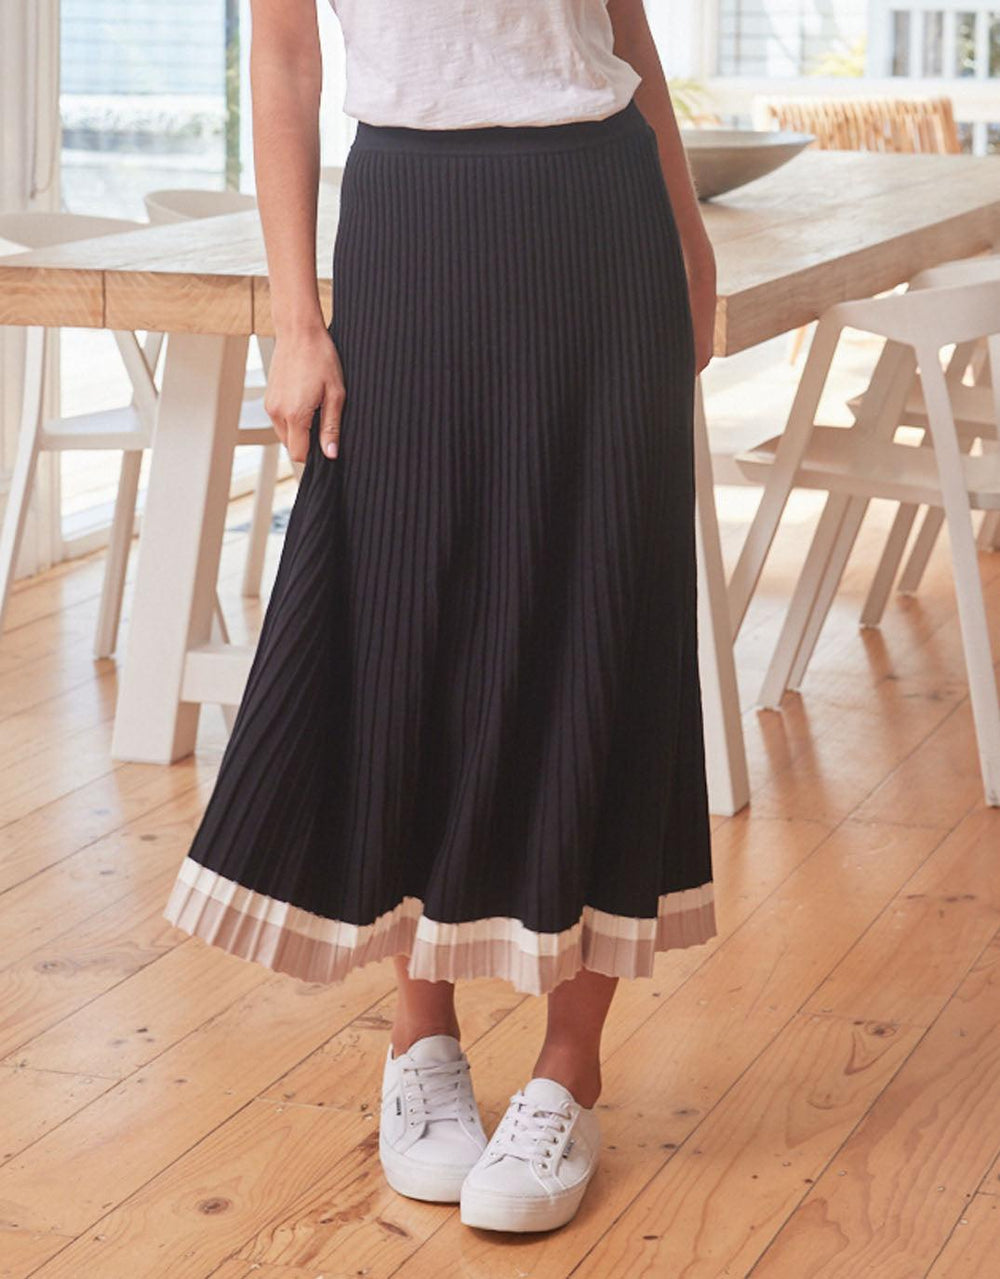 paulaglazebrook. - Giselle Rib Skirt - Black/Oat/White - paulaglazebrook Skirts